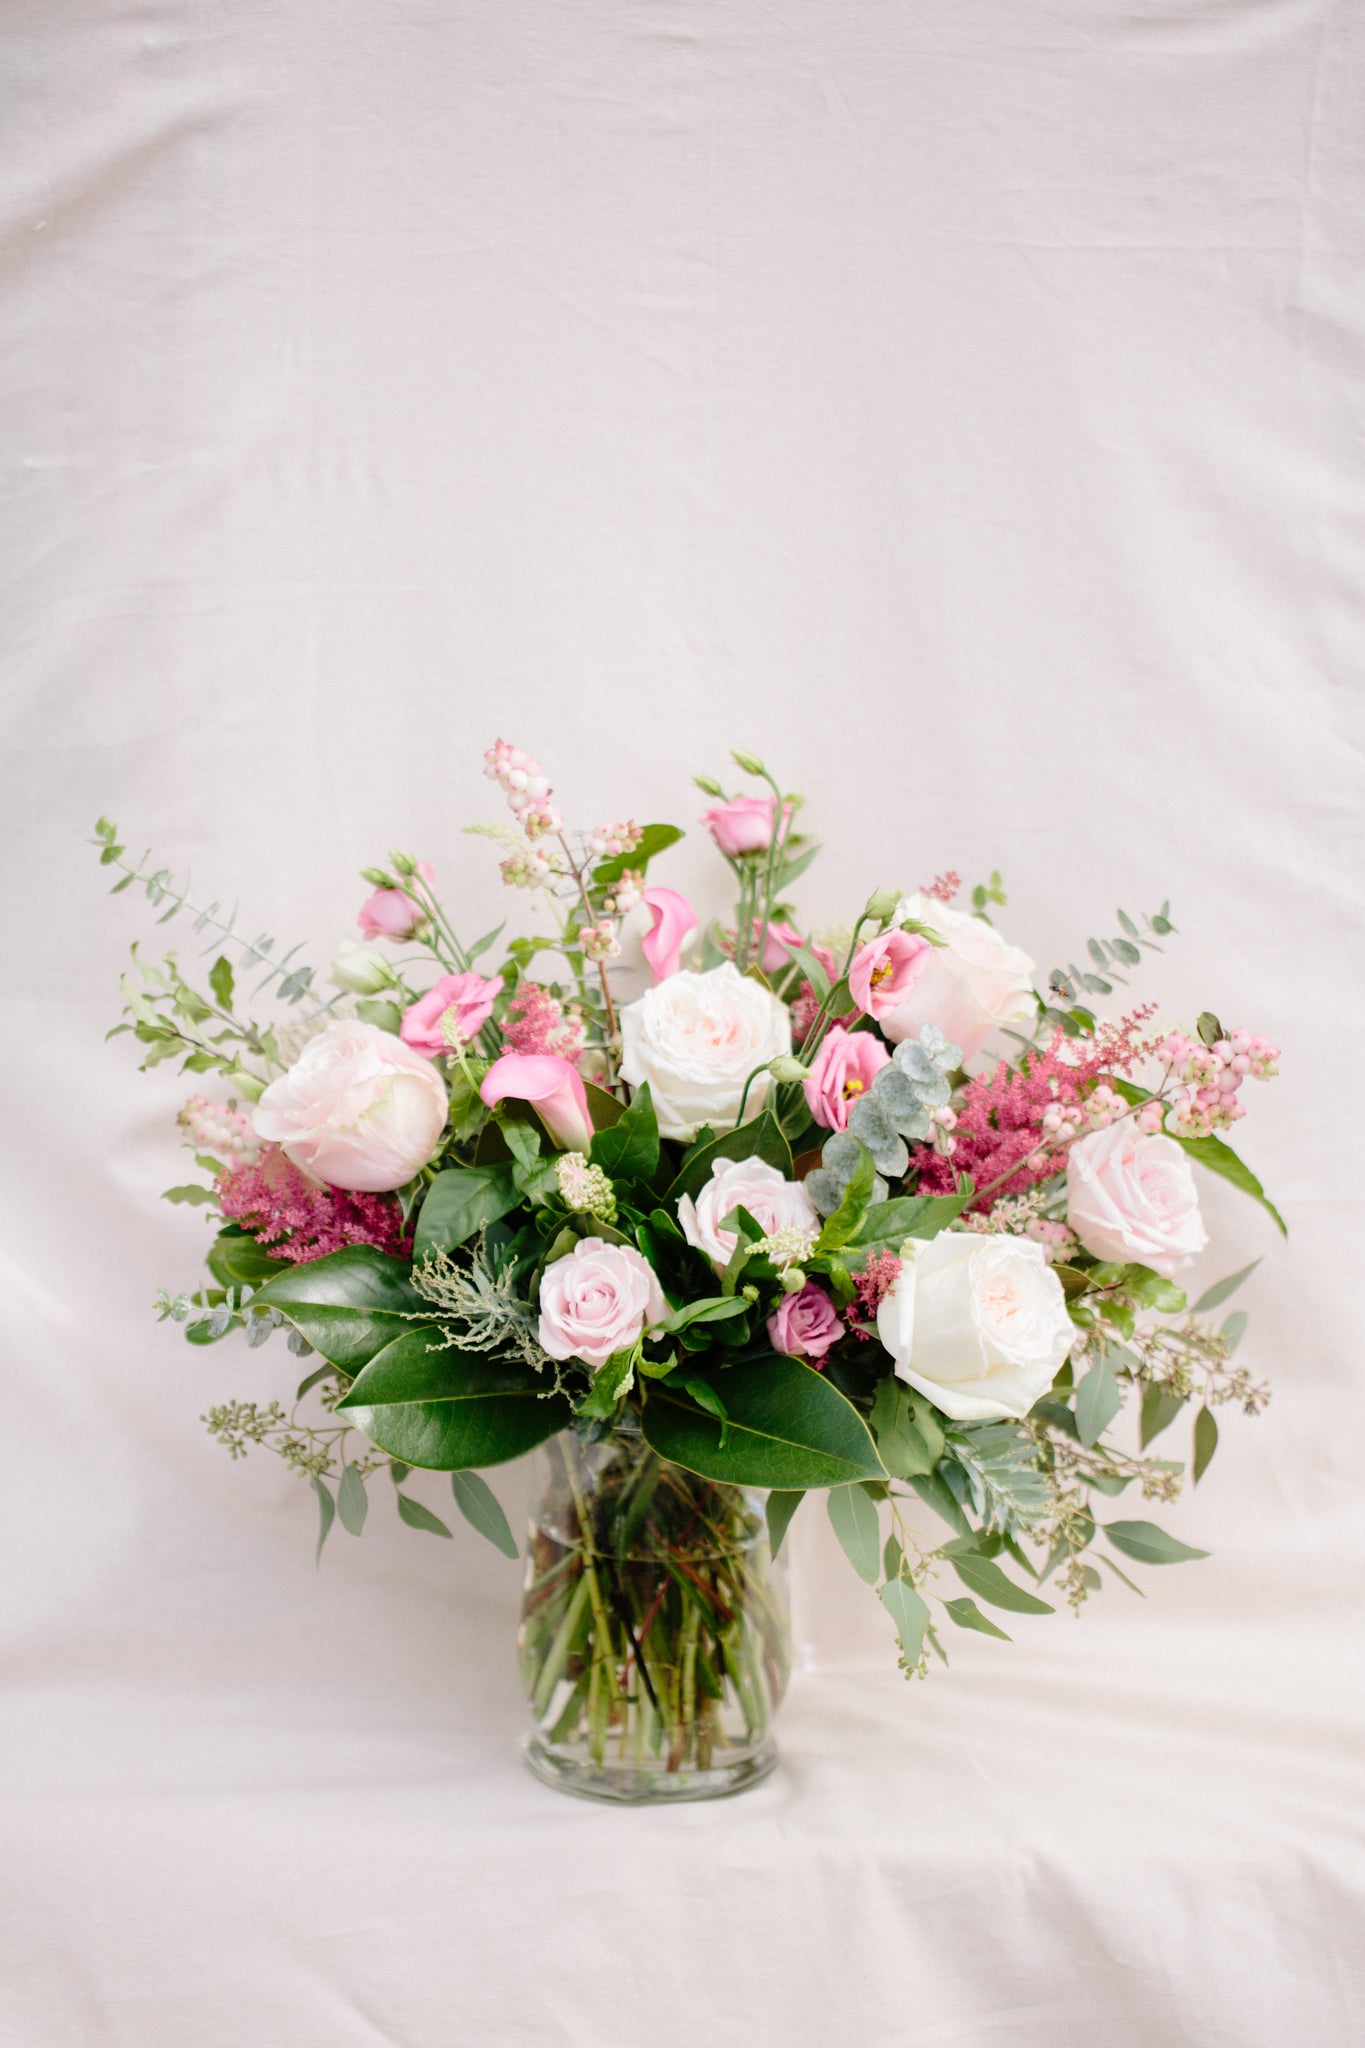 Soft Garden vase arrangements